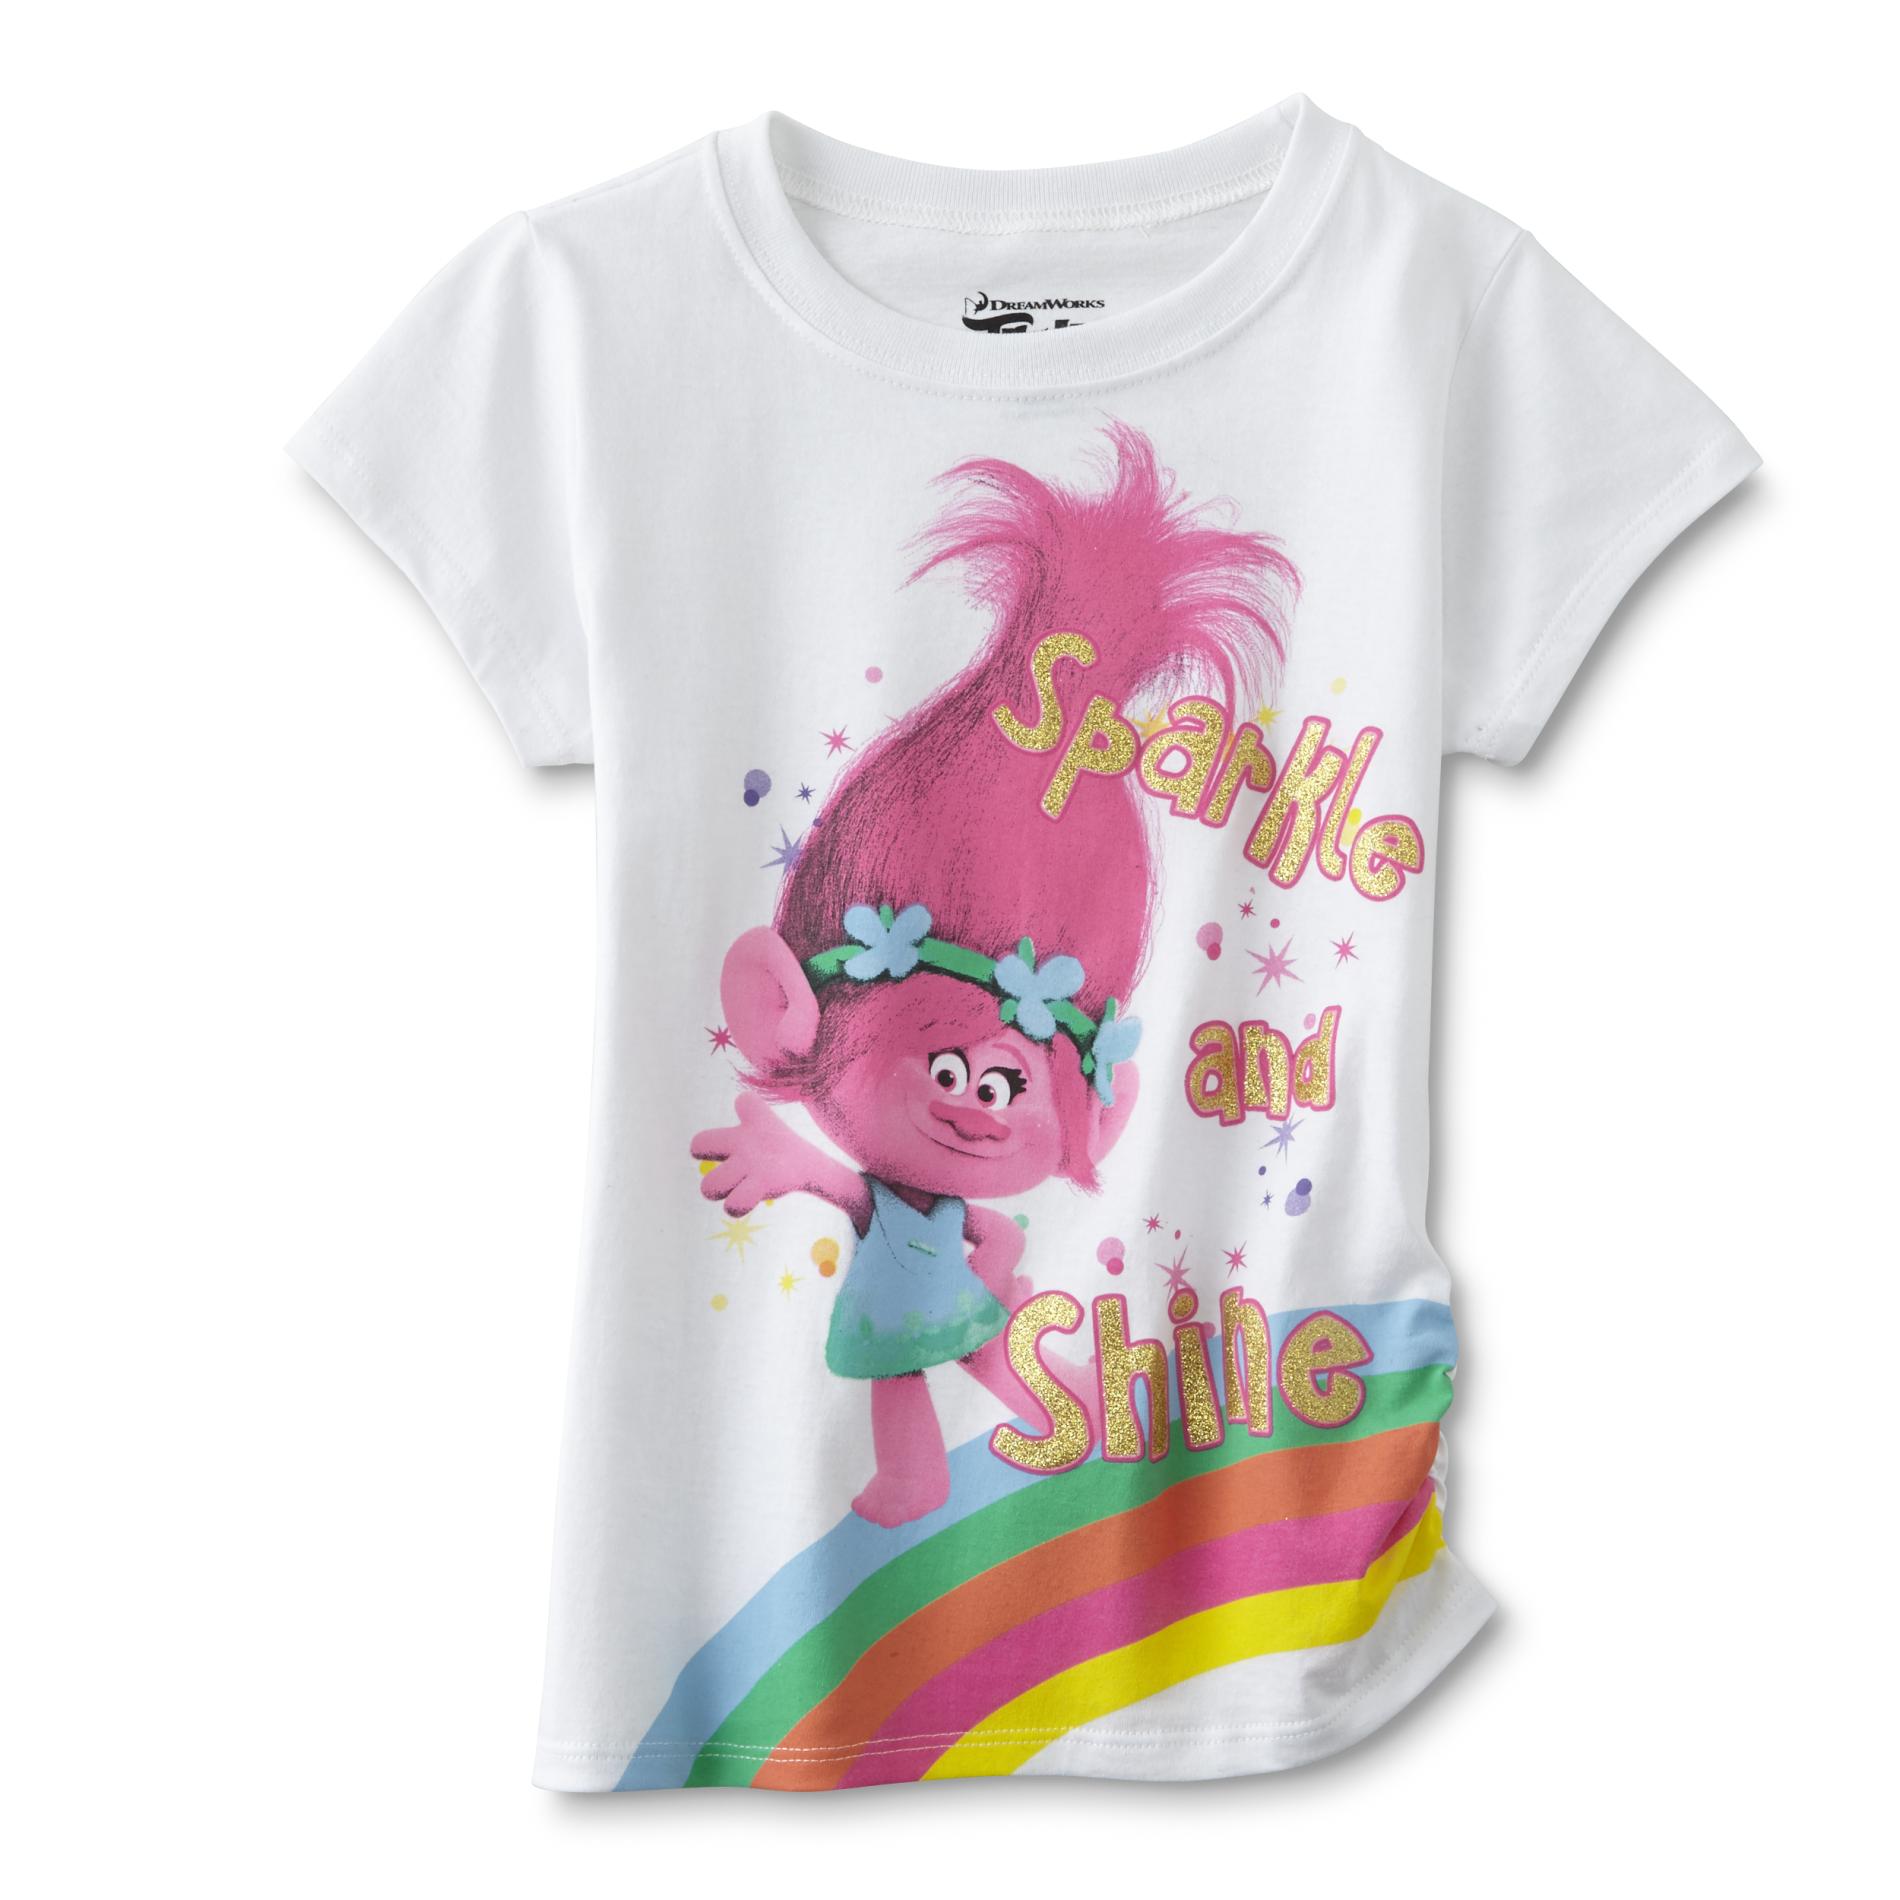 Dreamworks Trolls Girls' T-Shirt - Princess Poppy